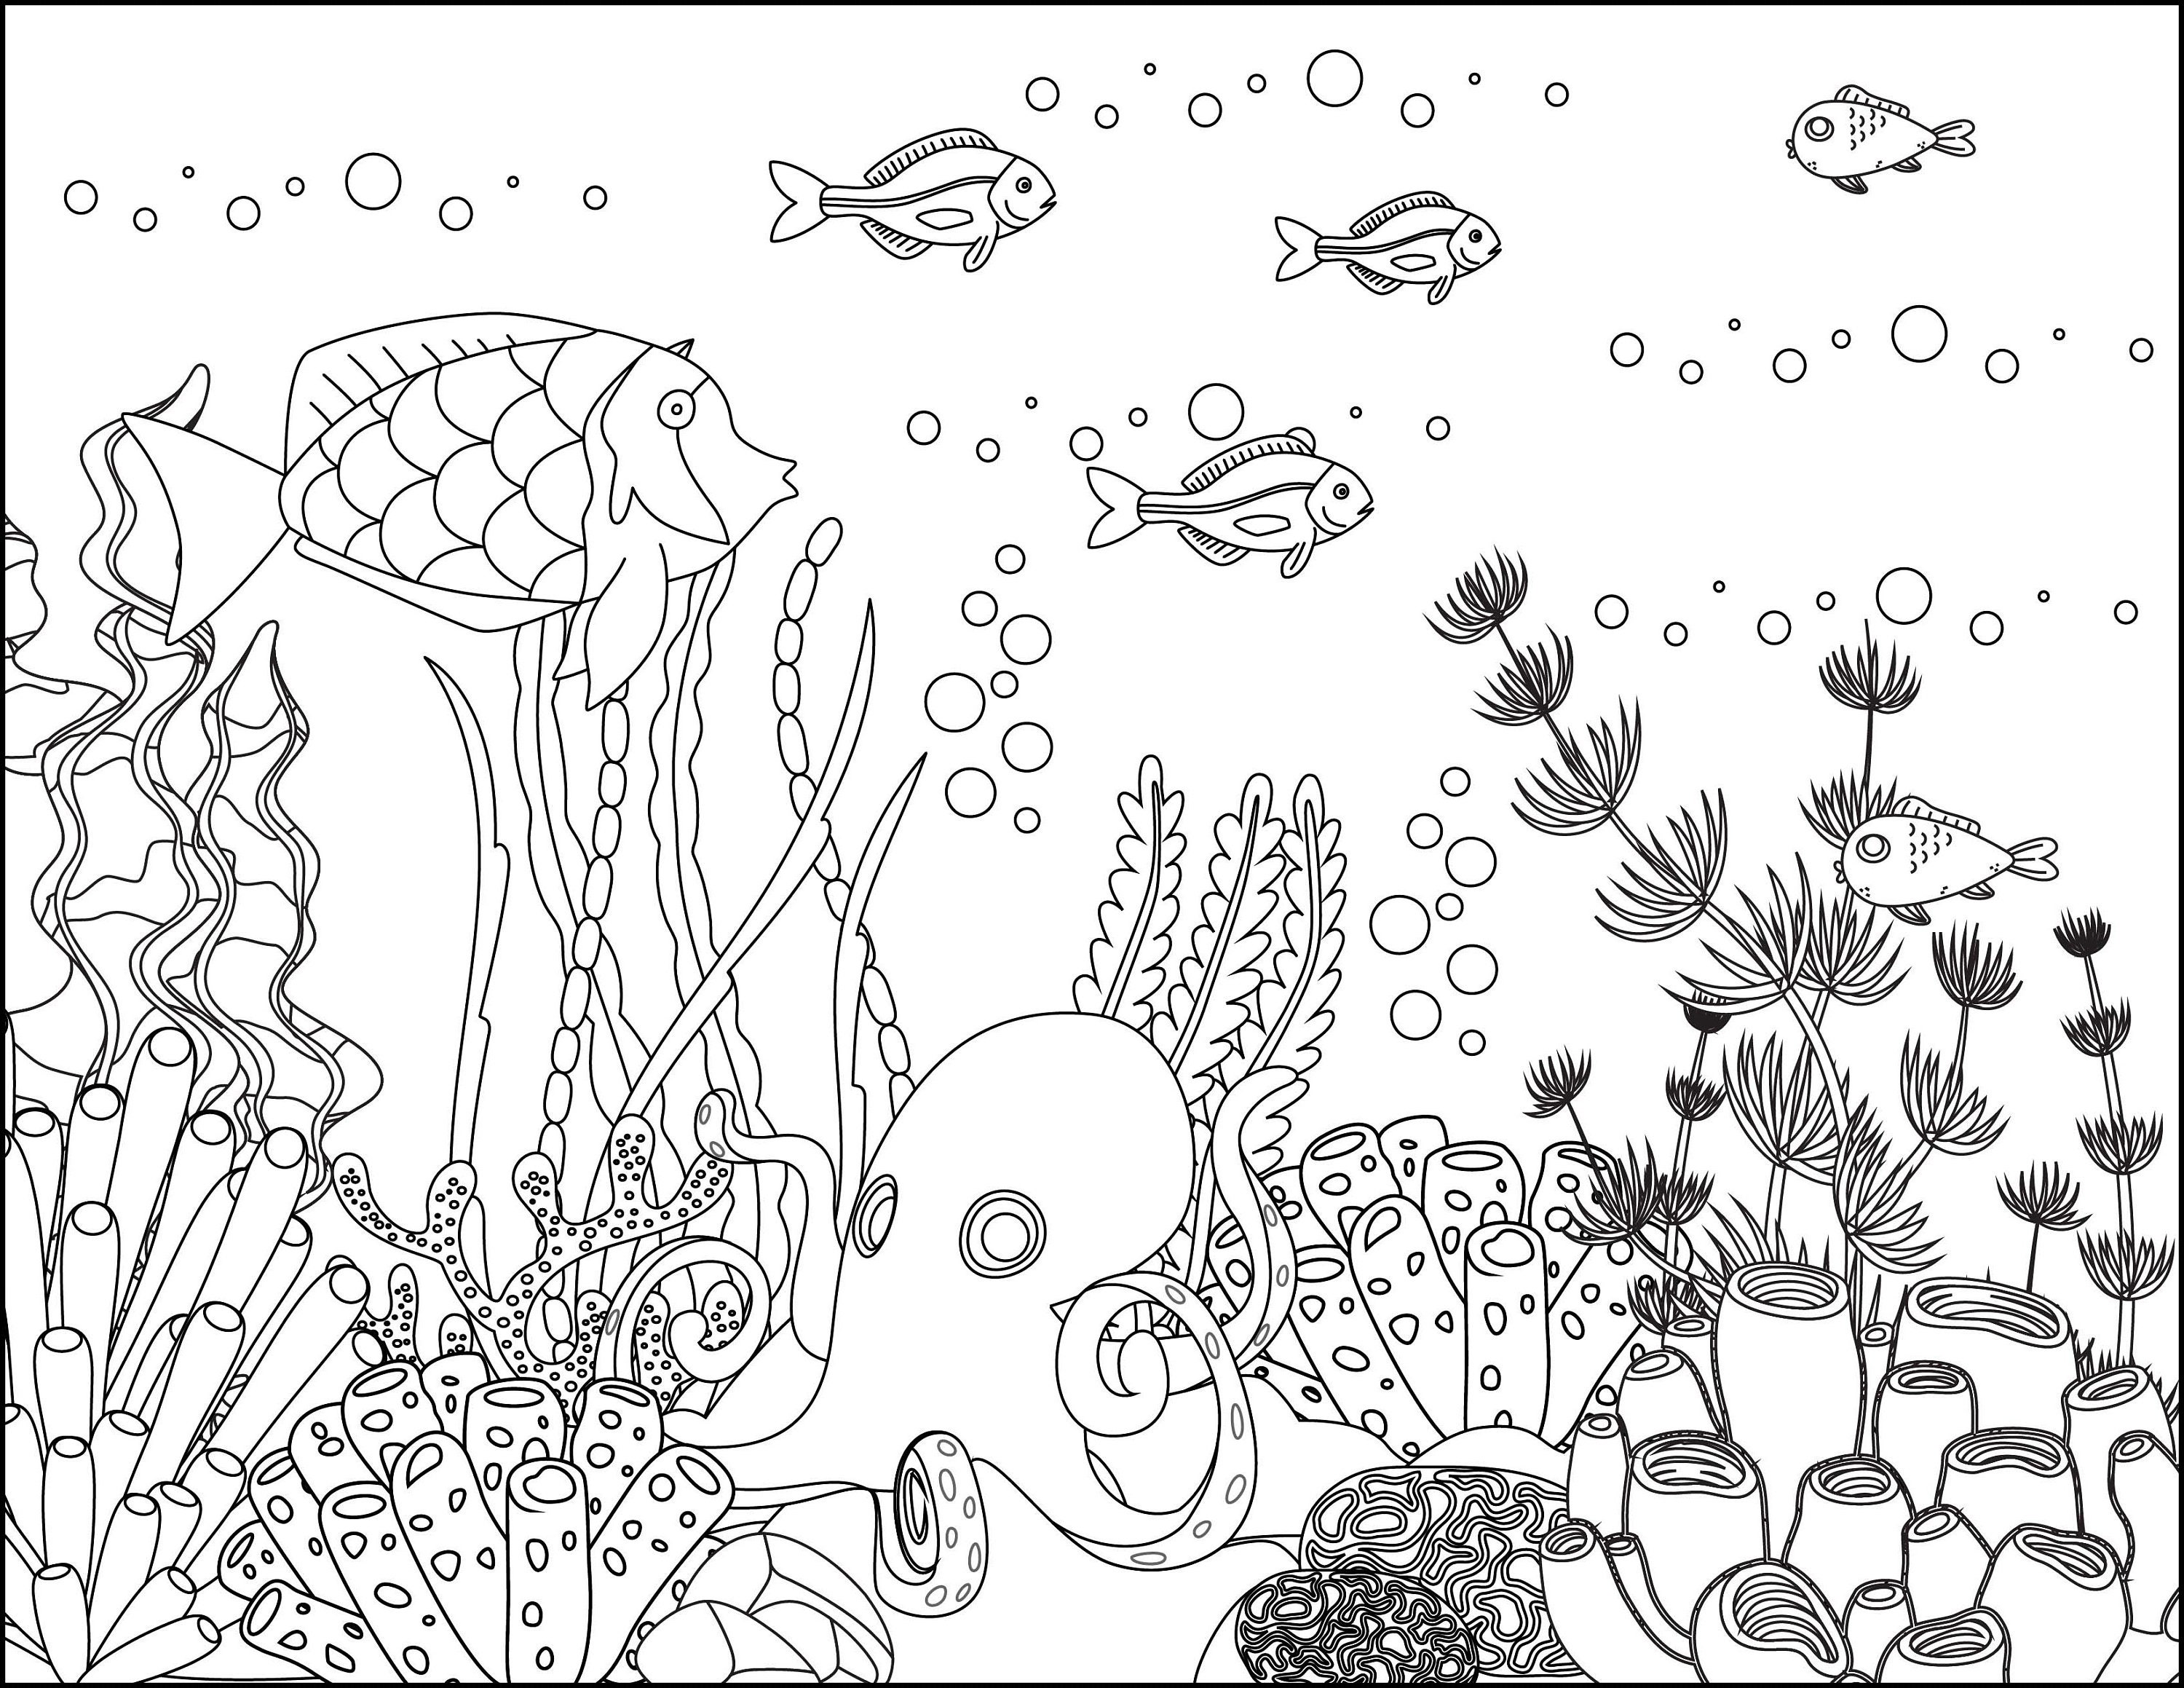 10 Ocean Creatures Coloring Sheets - Etsy